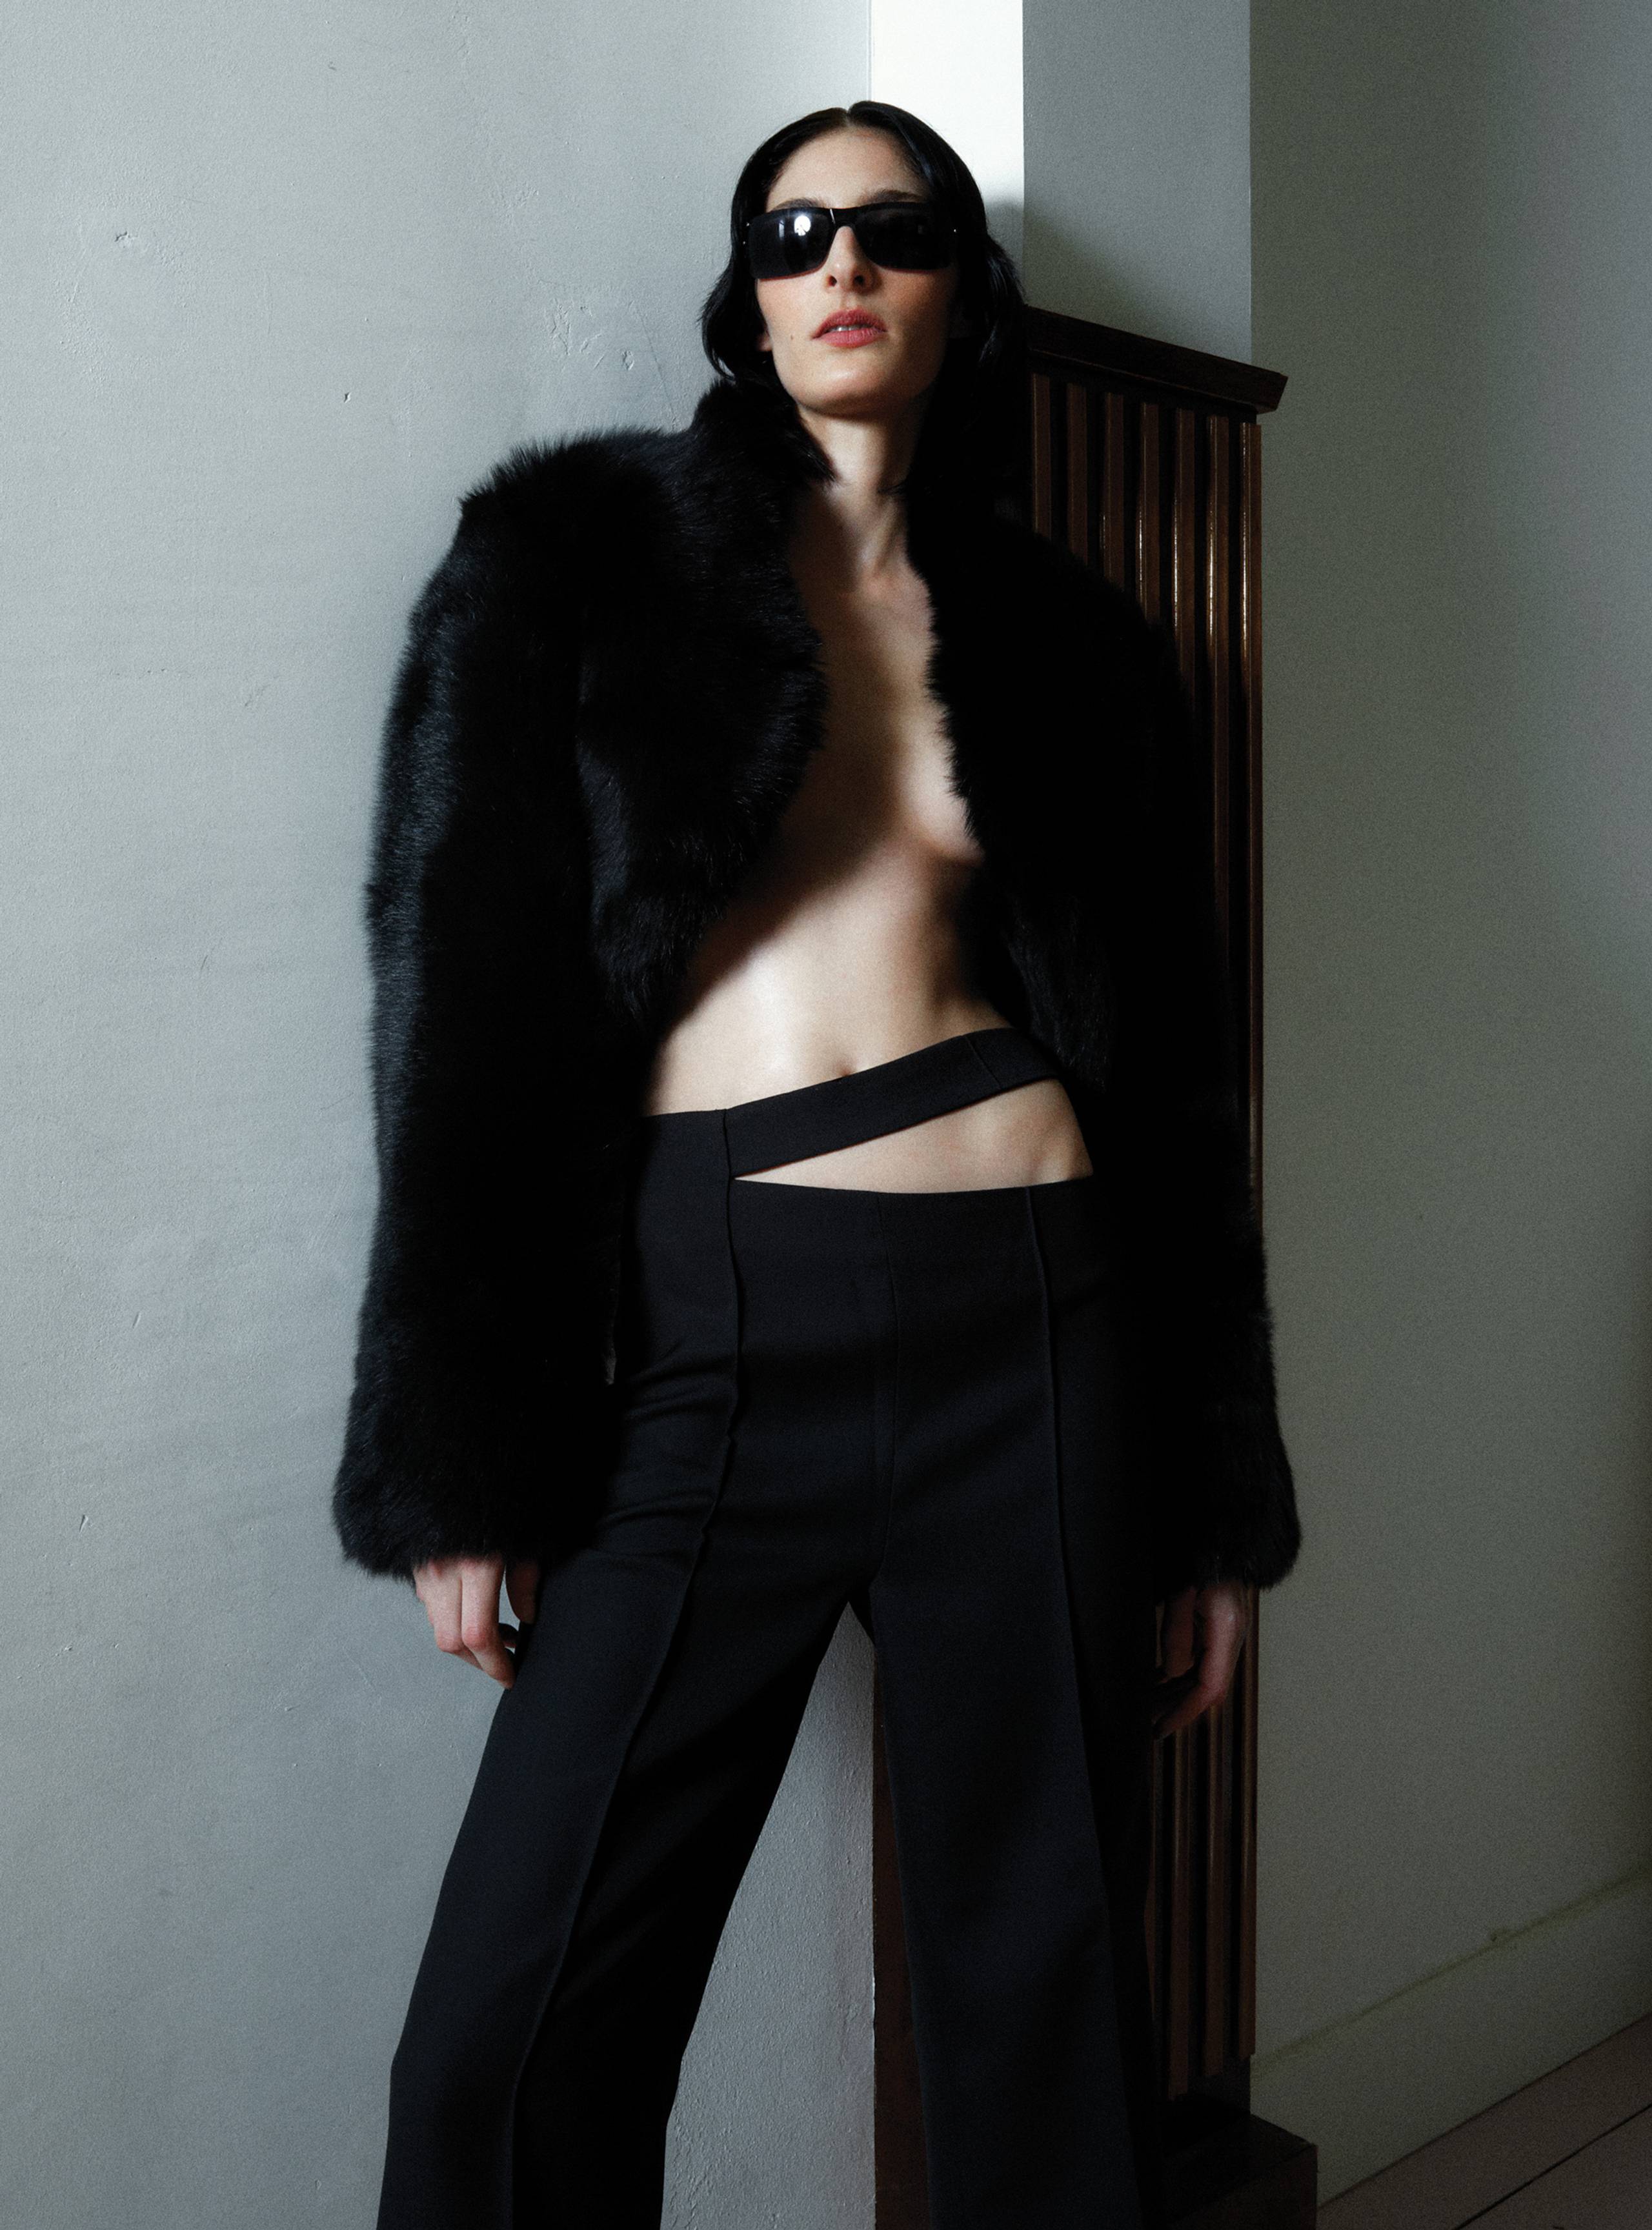 A model standing wearing the Black Bolero luxurious shearling jacket